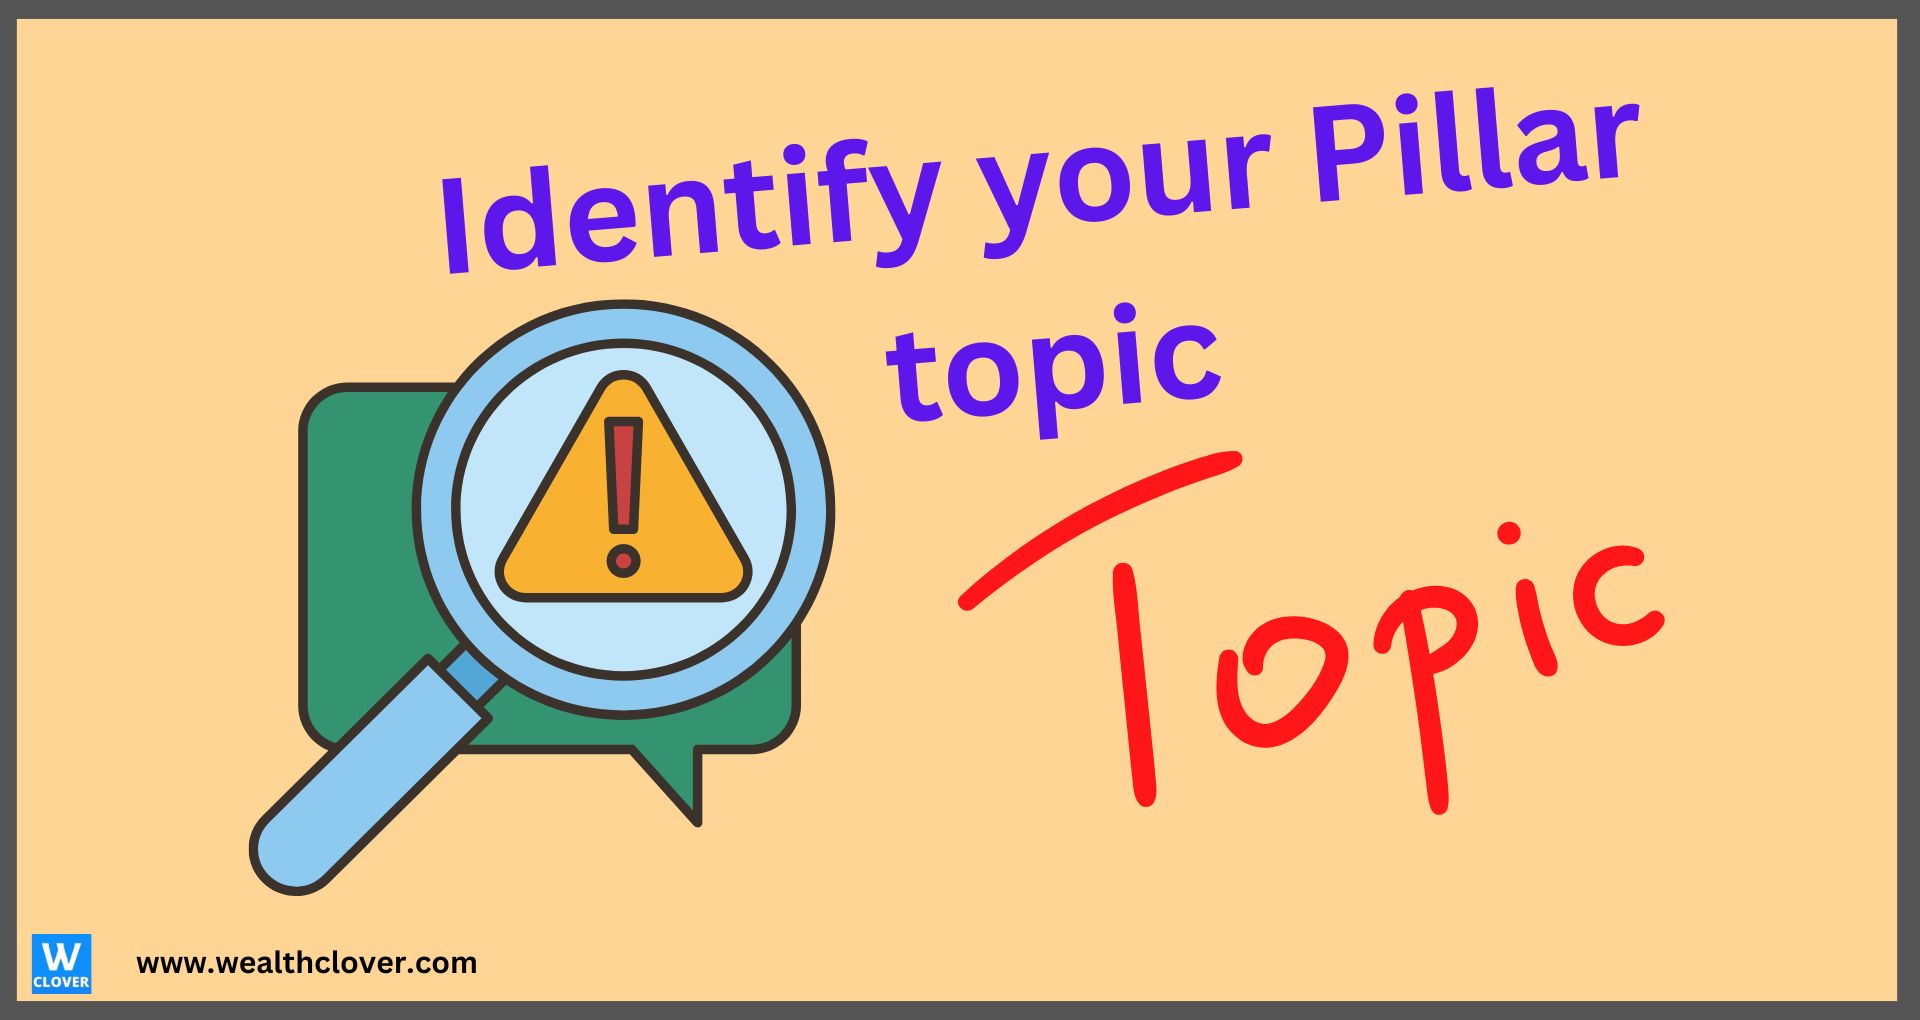 Identify your Pillar topic